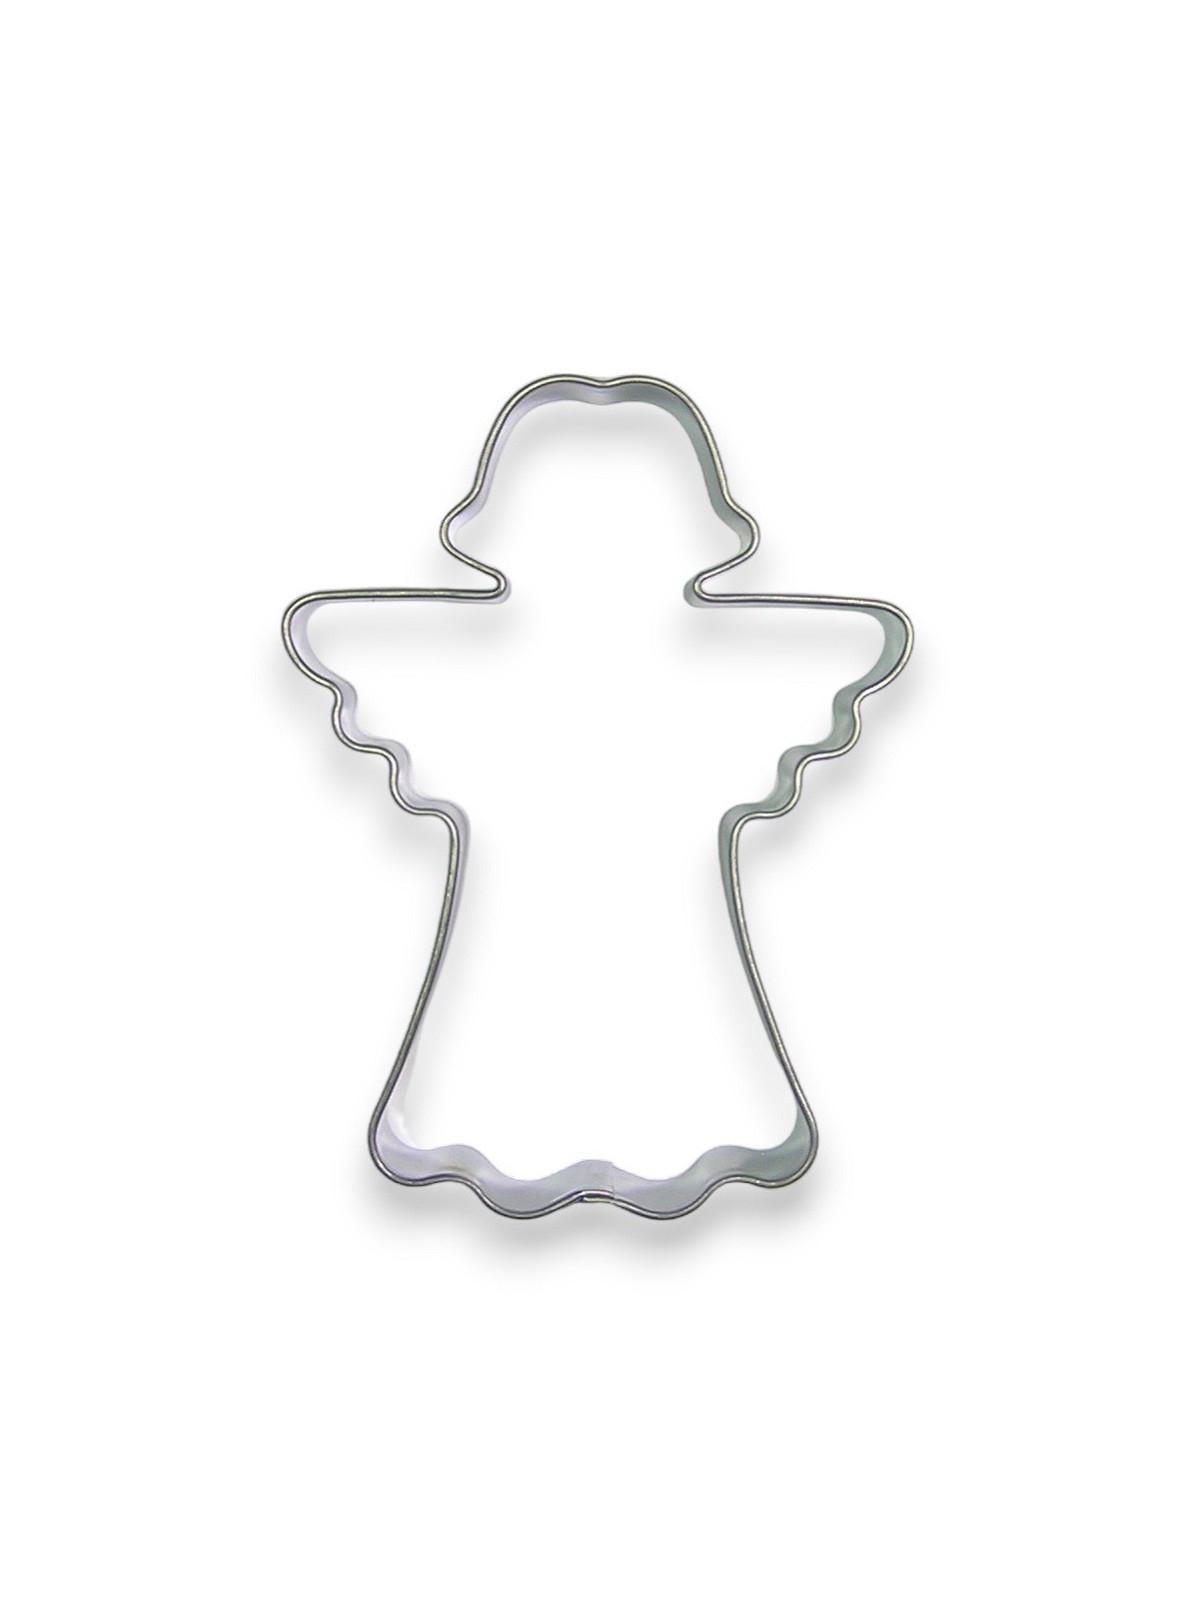 Stainless steel cookie cutter - angel II